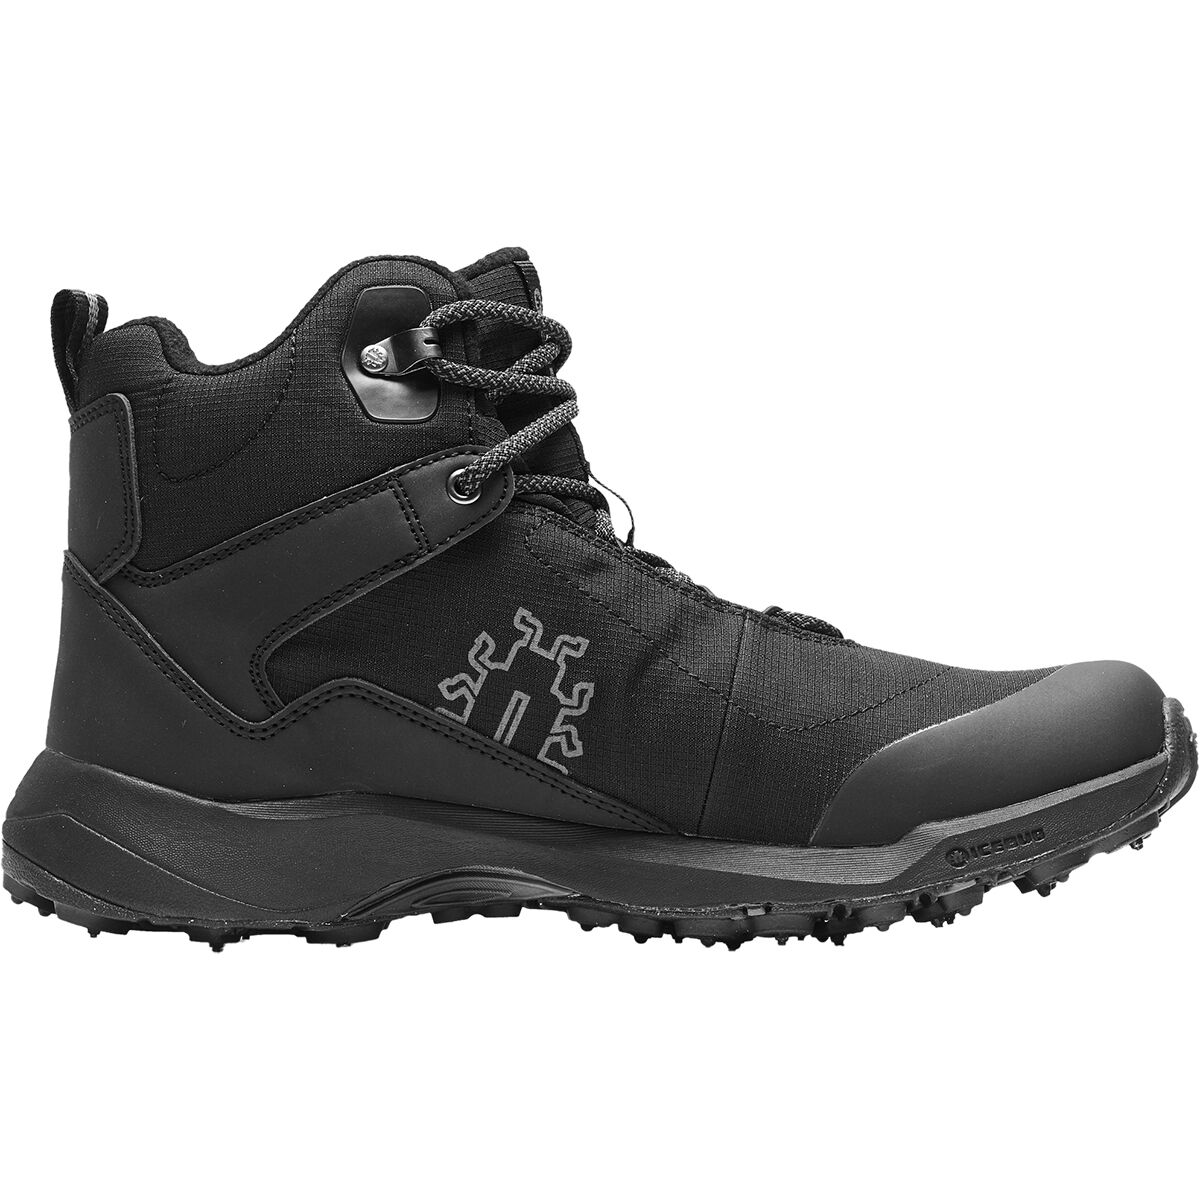 Pace3 BUGrip GTX Hiking Boot - Men